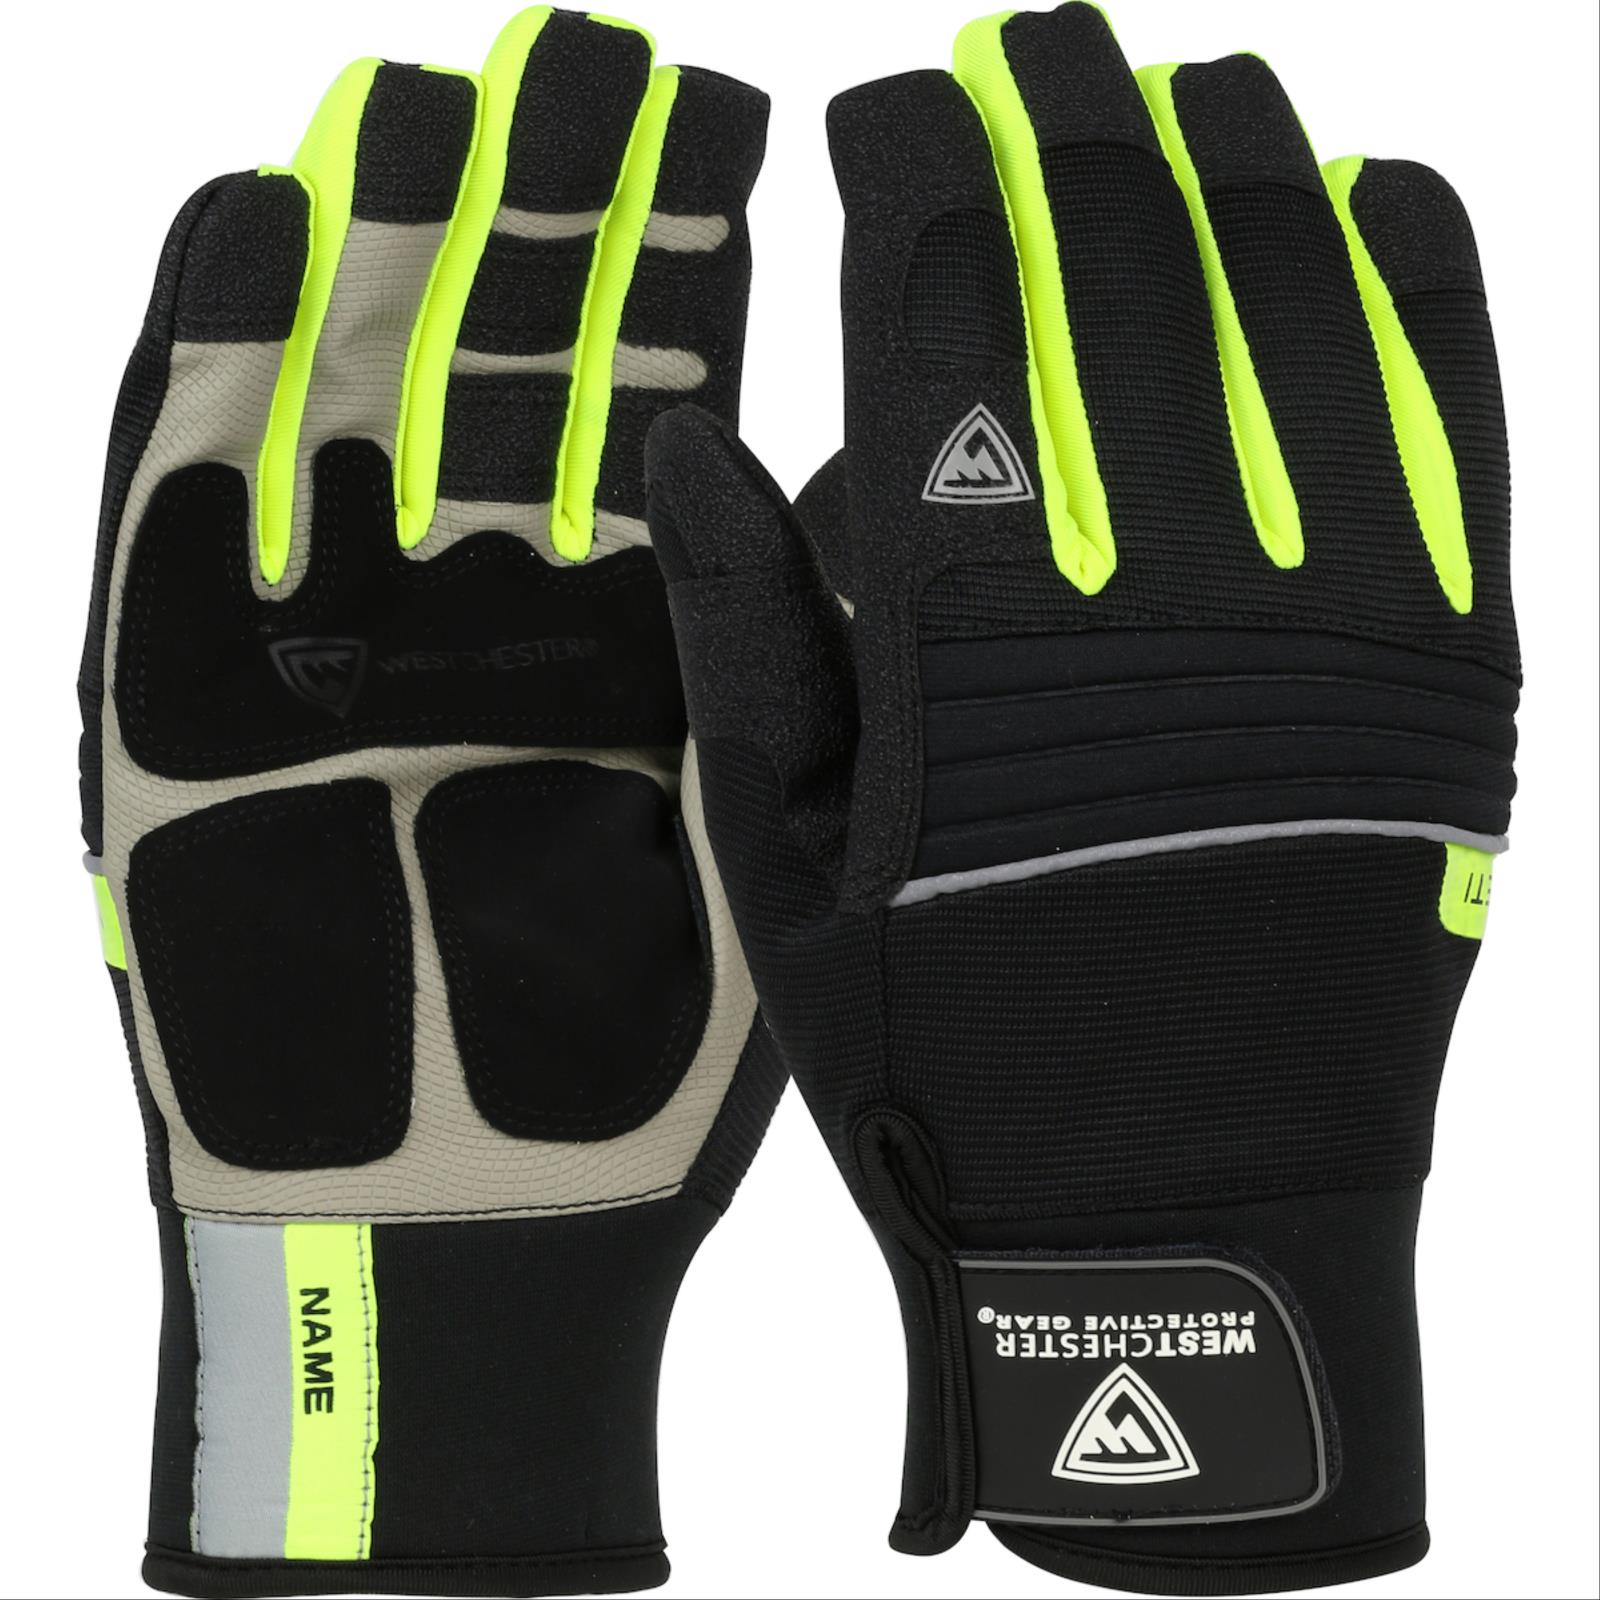 Waterproof Winter Lined Hi-Dexterity Work Gloves